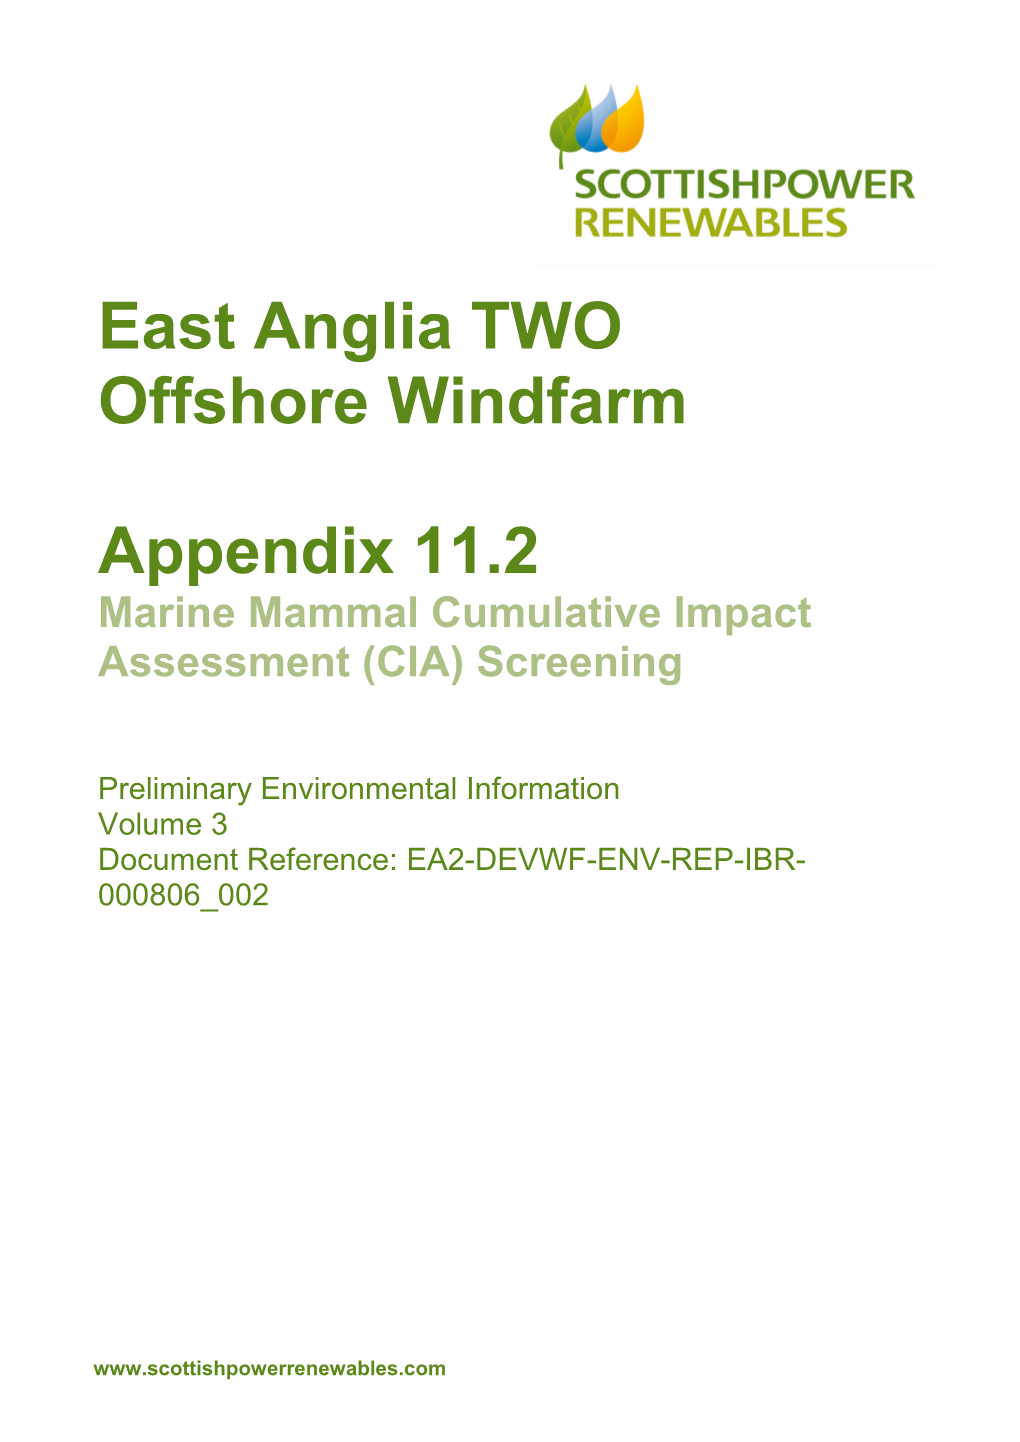 East Anglia TWO Offshore Windfarm Appendix 11.2